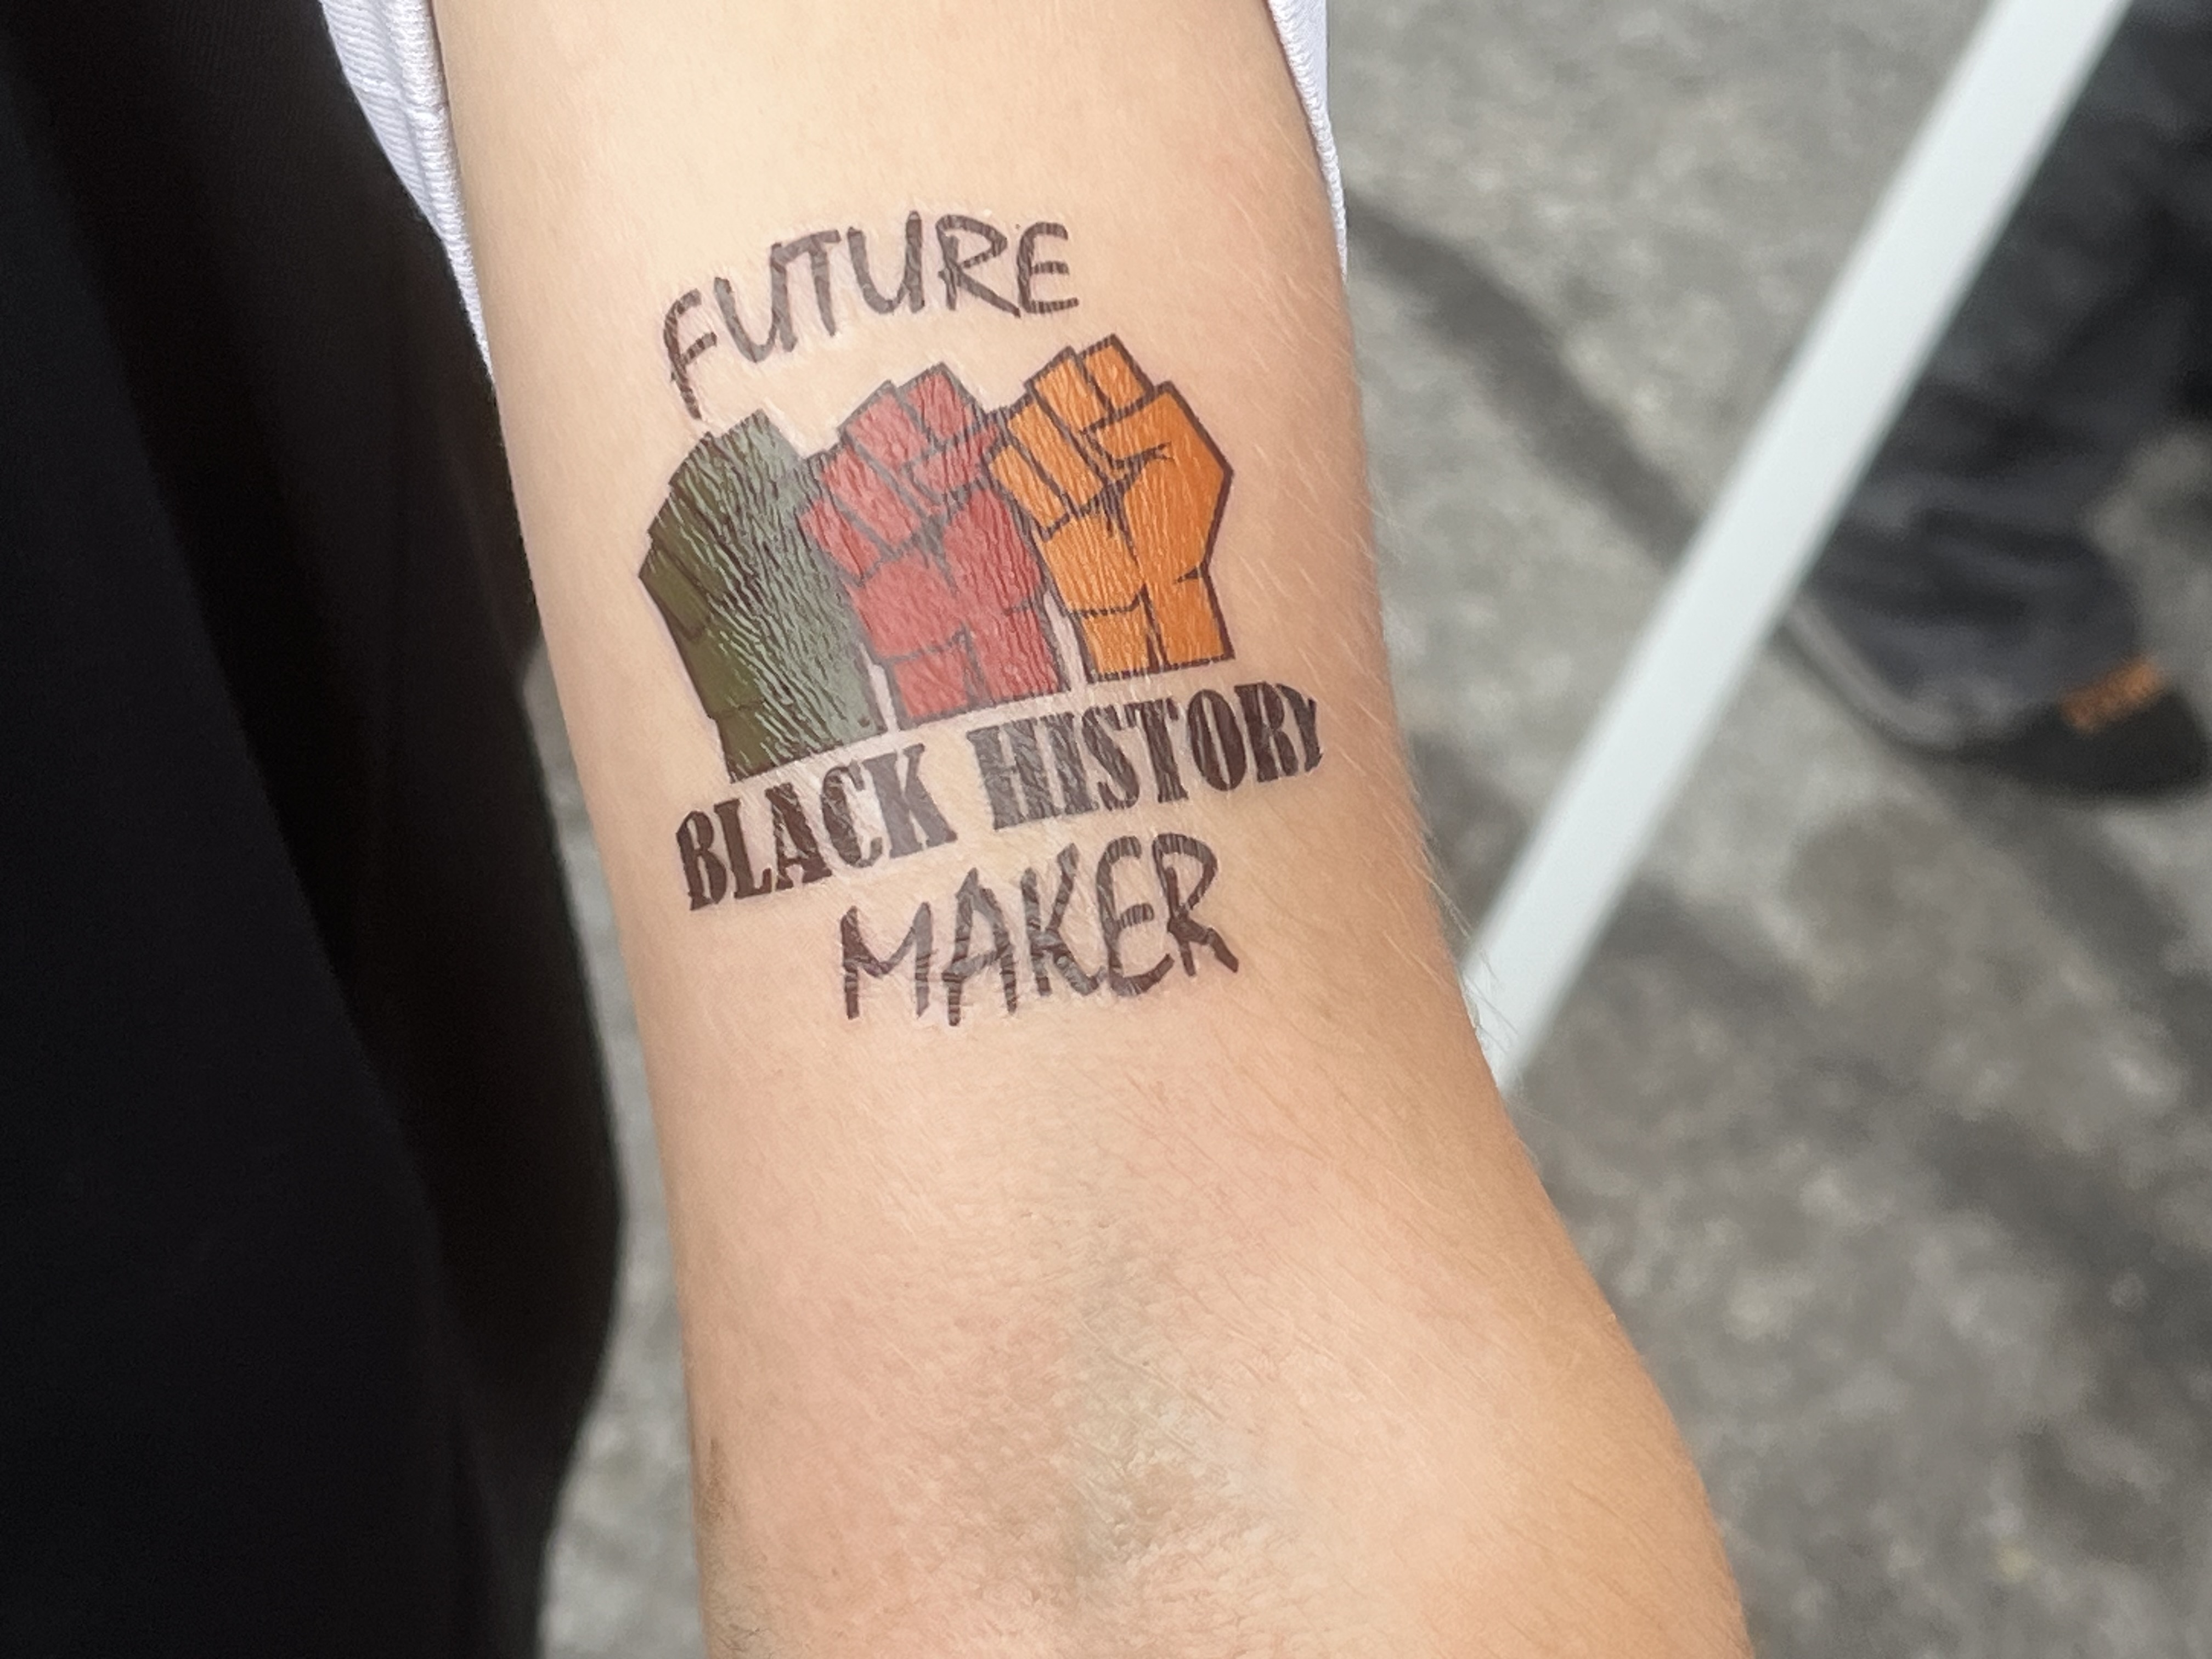 Juneteenth Freedom Resource Festival Future Black History Maker